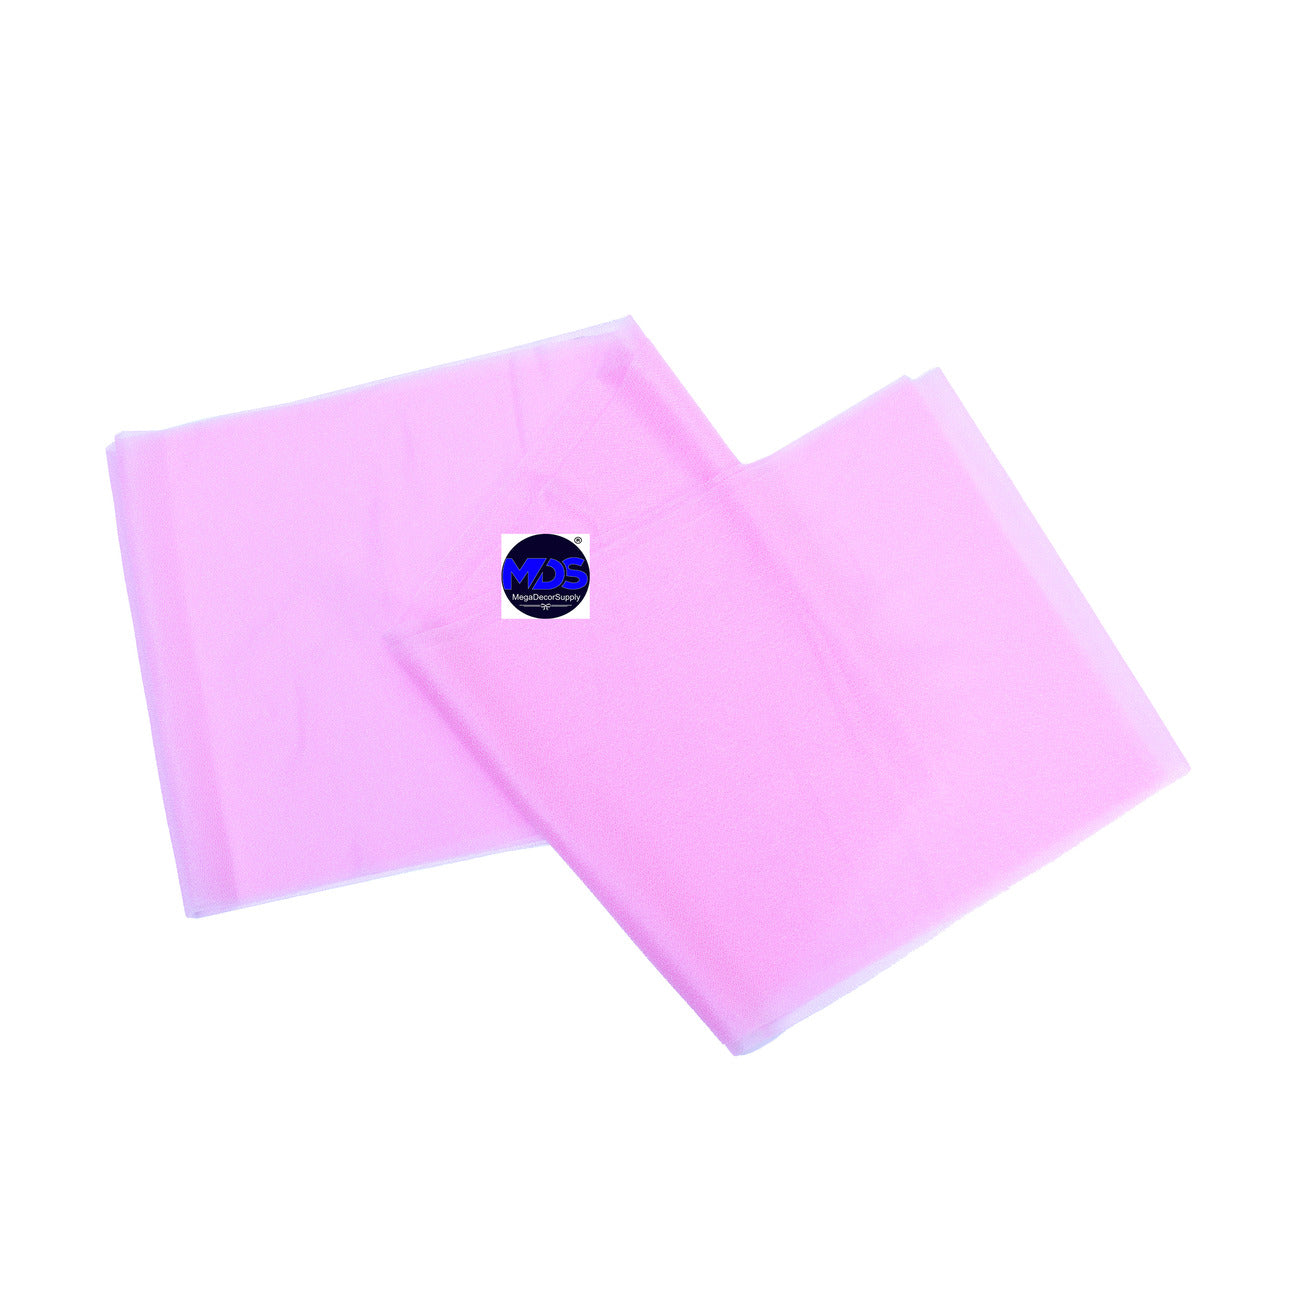 Bubblegum Pink,3051c3f9-89cf-489f-97e9-f9c4e0f0aebe